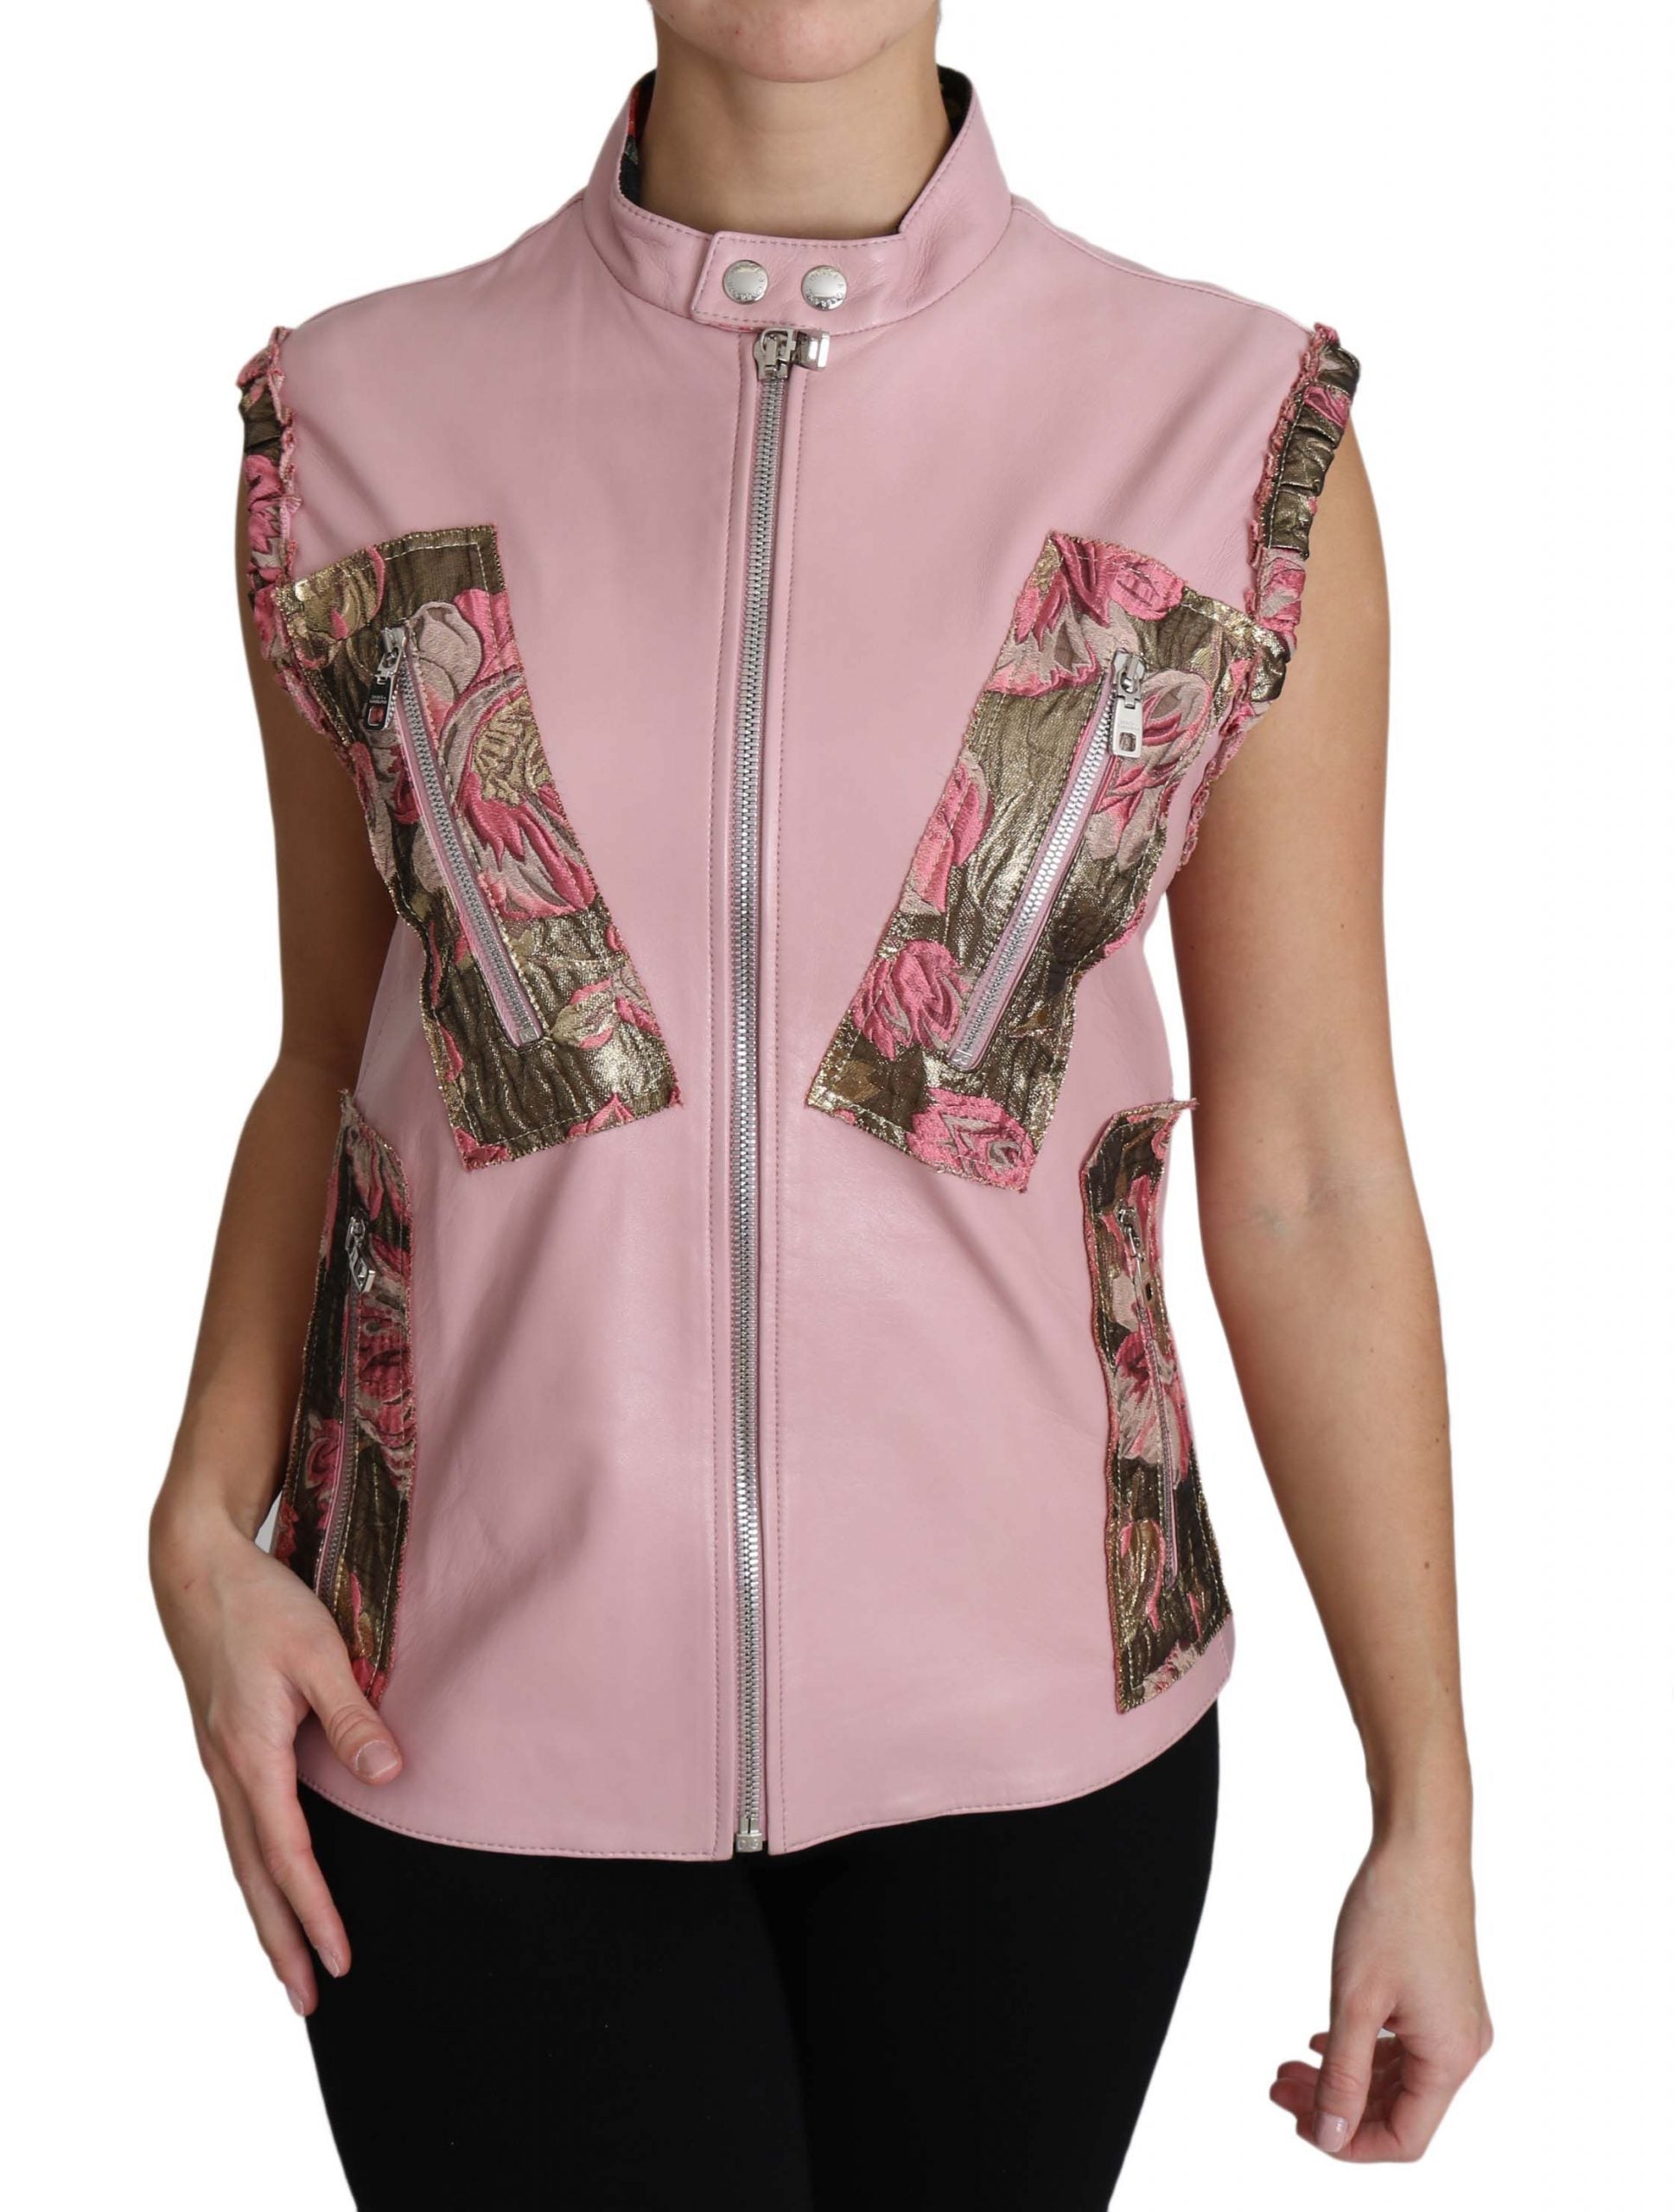 Stunning Pink Sleeveless Leather Vest